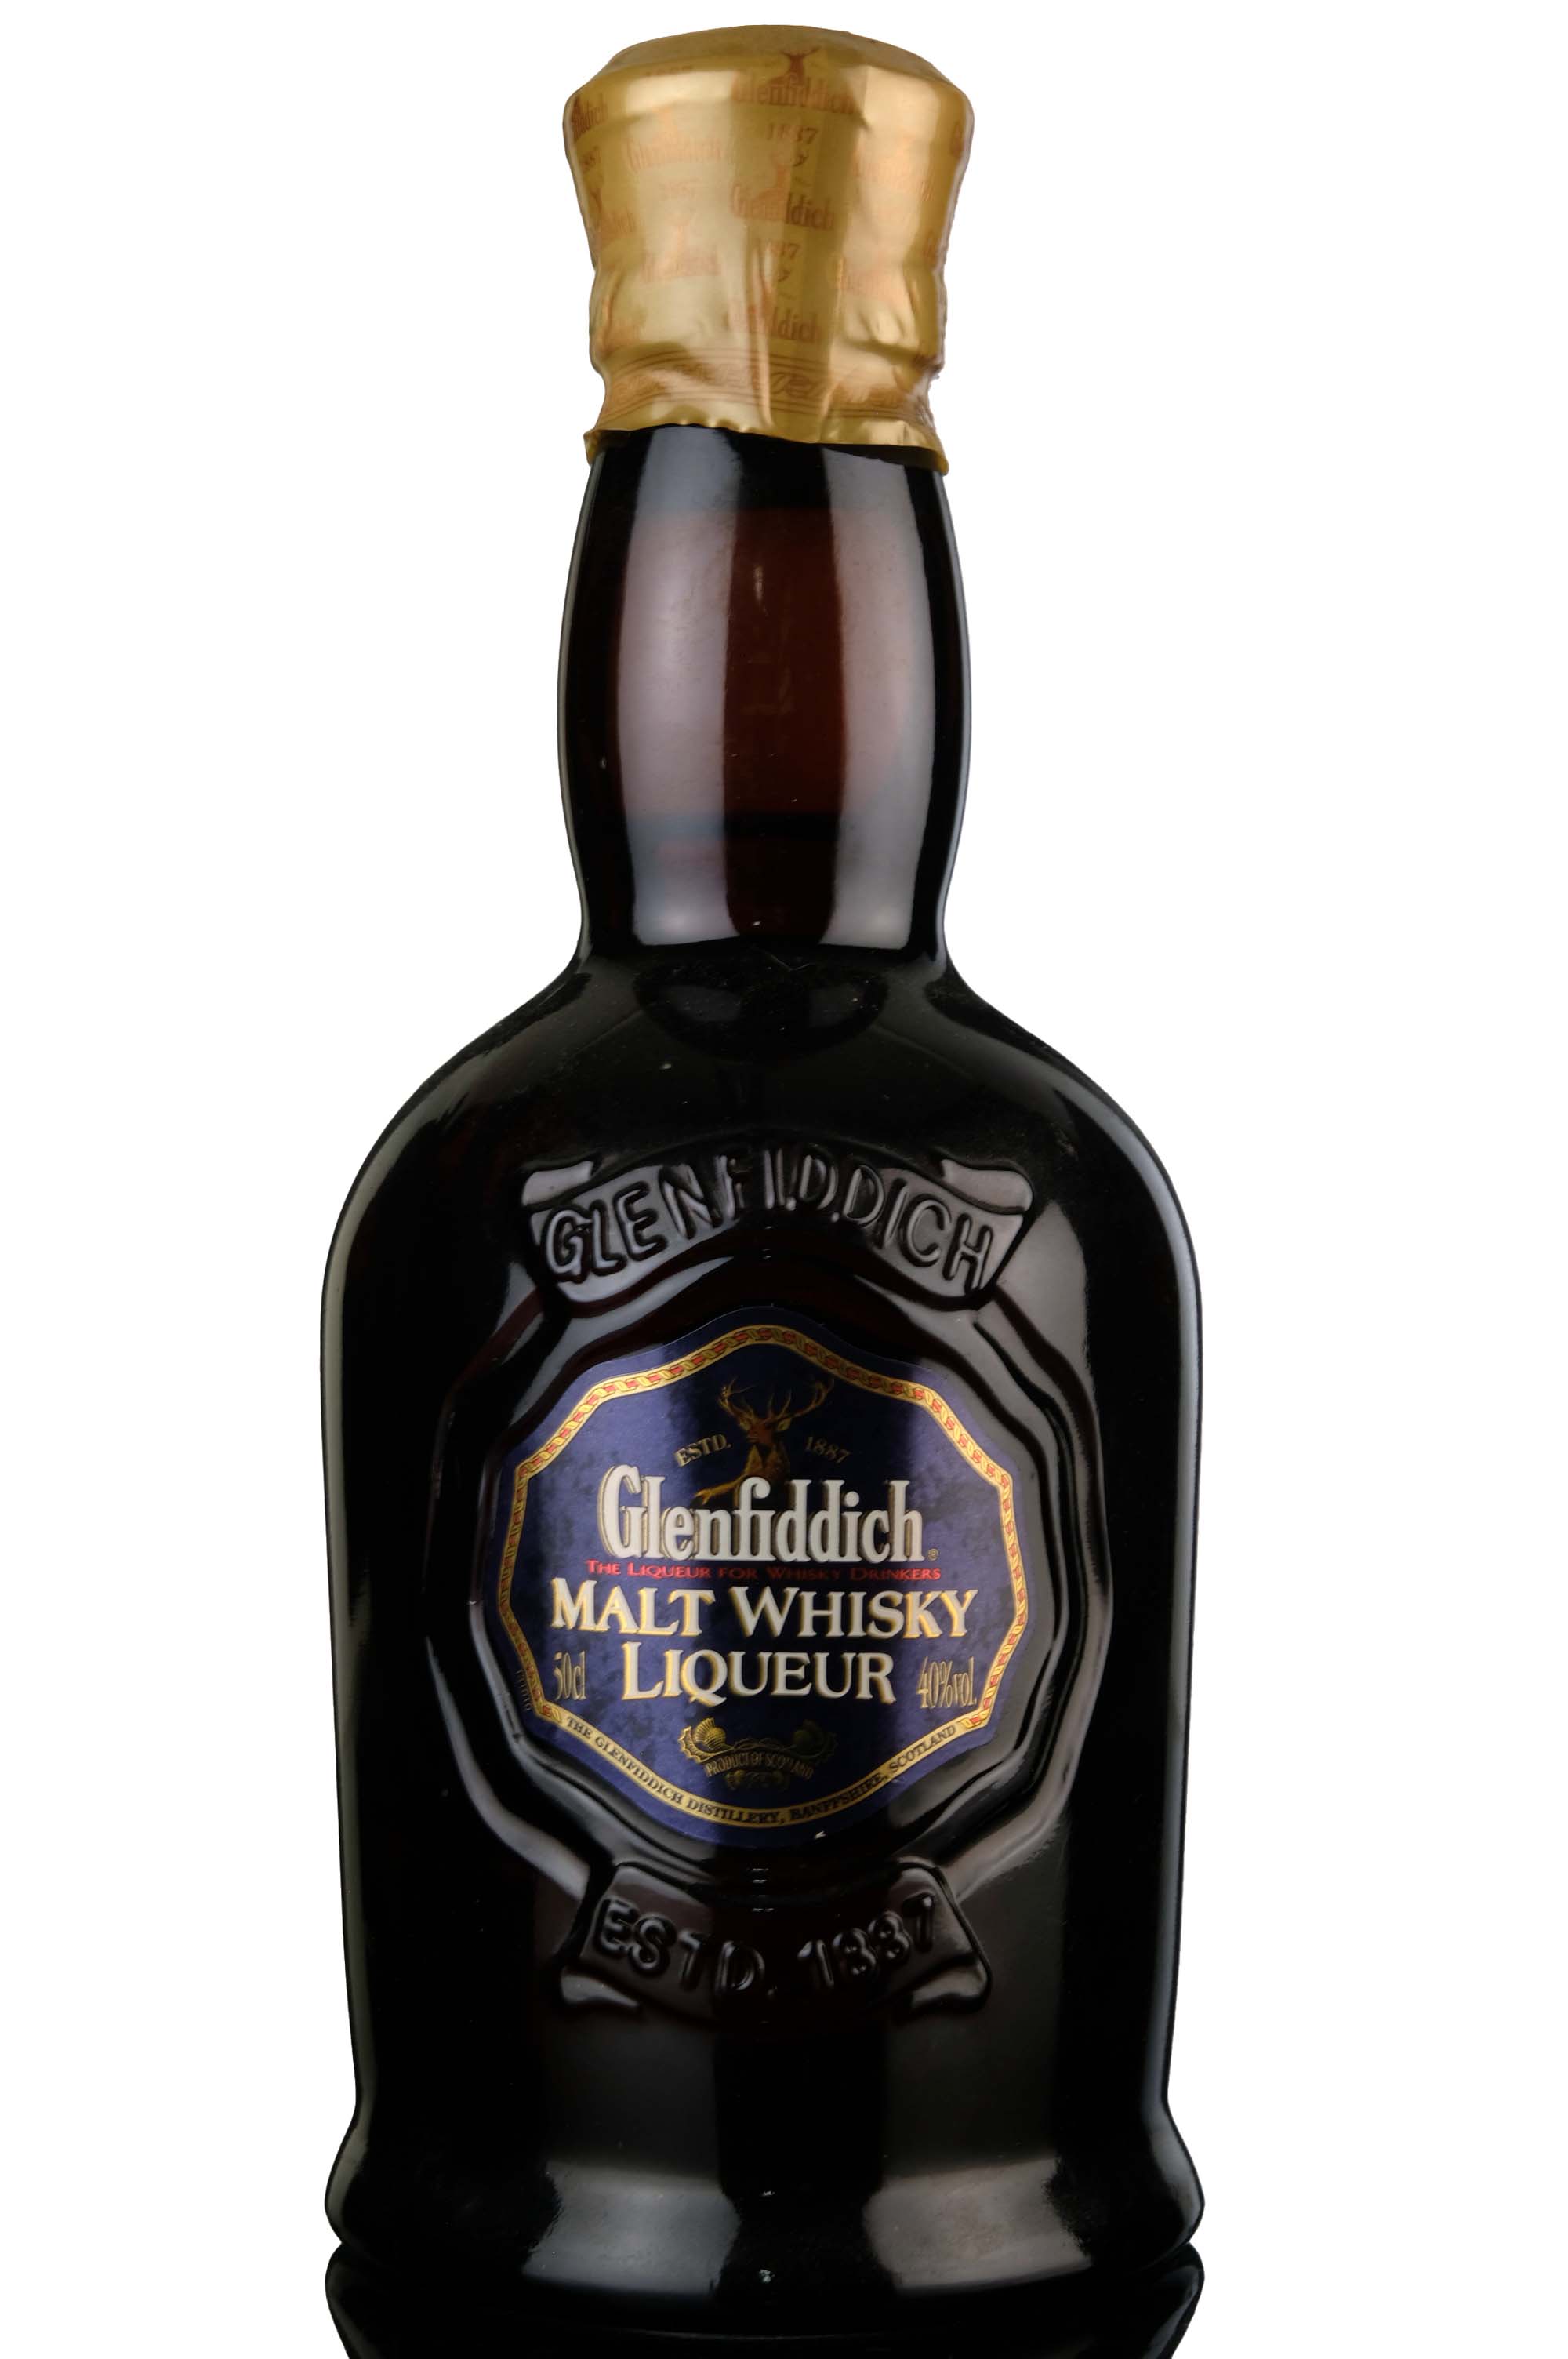 Glenfiddich Malt Whisky Liqueur - 2005 Release